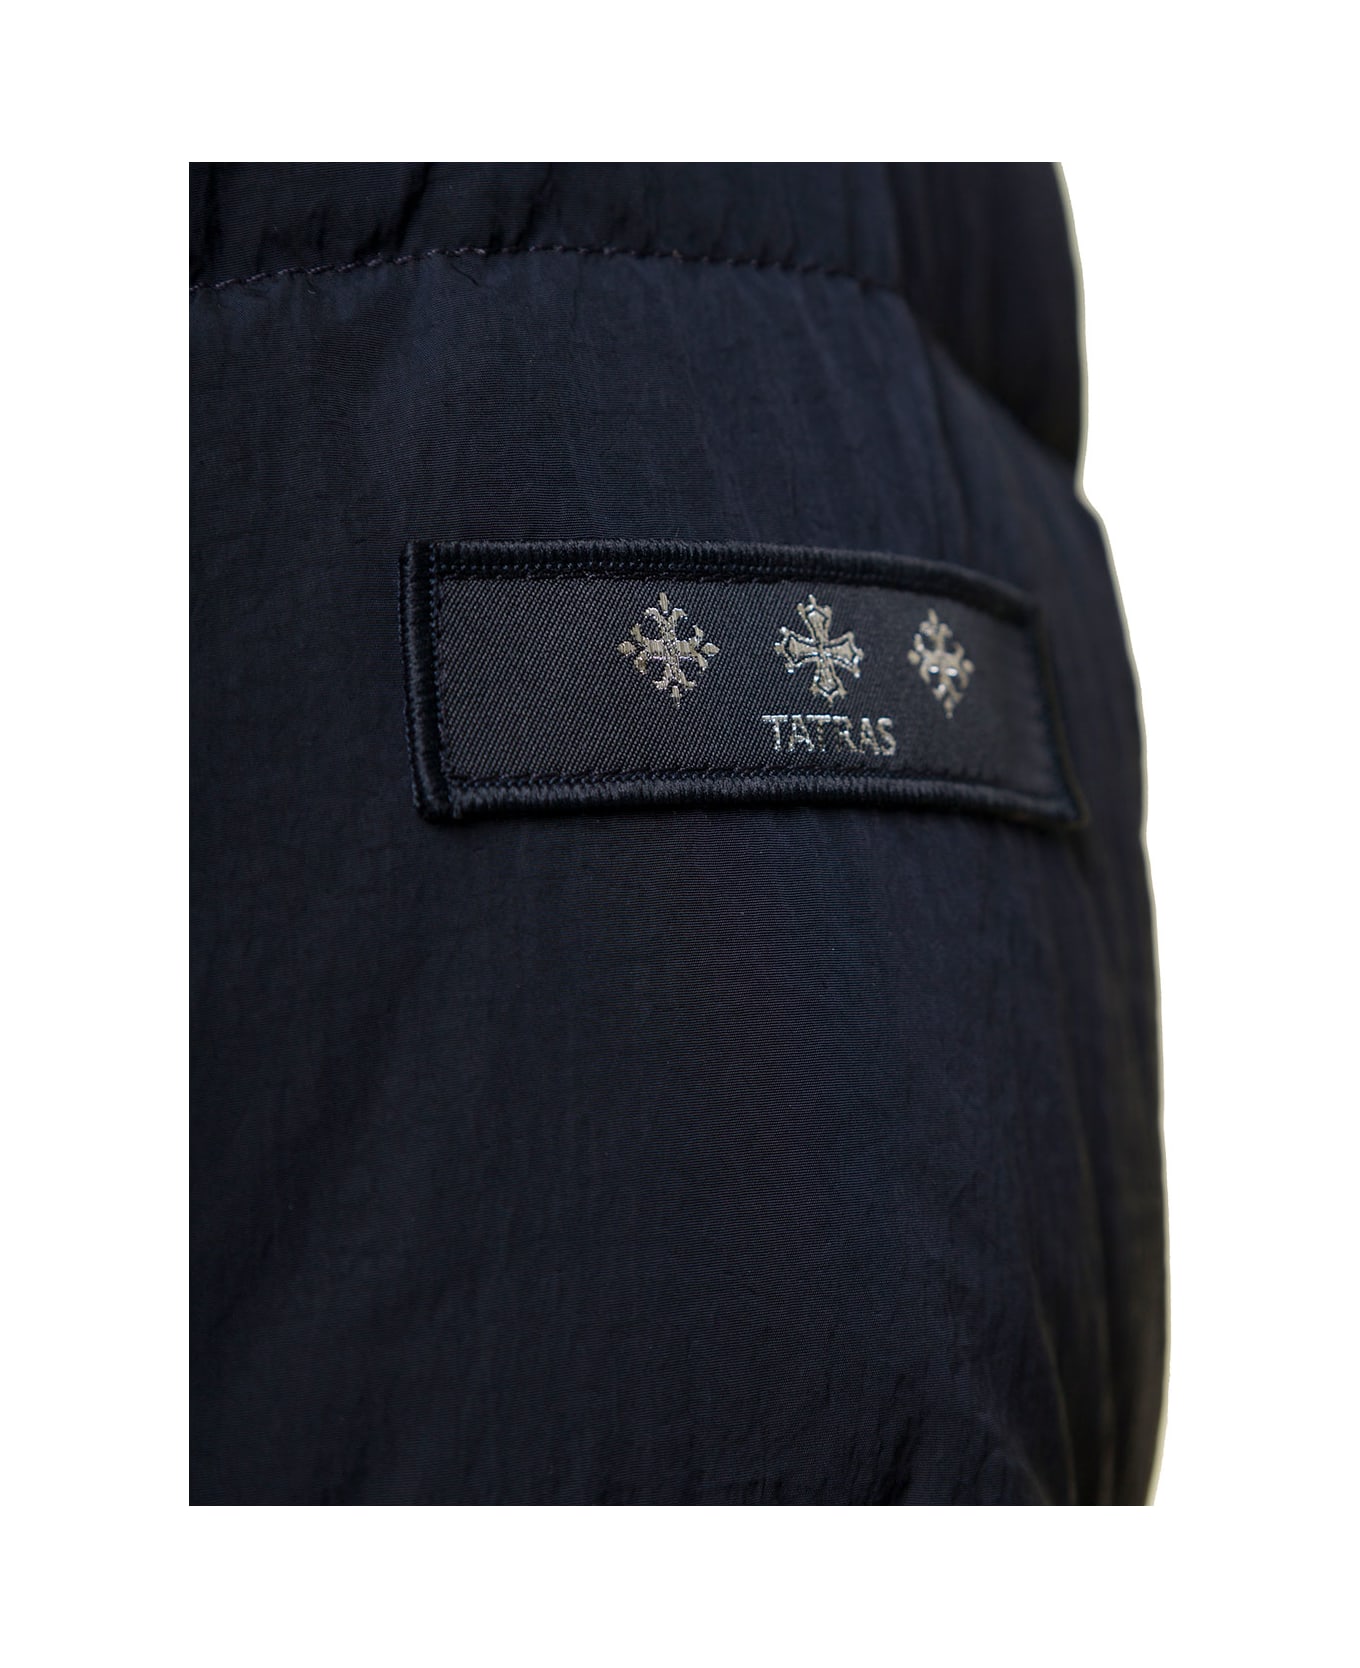 TATRAS 'sinami' Blue Down Jacket With Logo Patch In Nylon Man - Navy